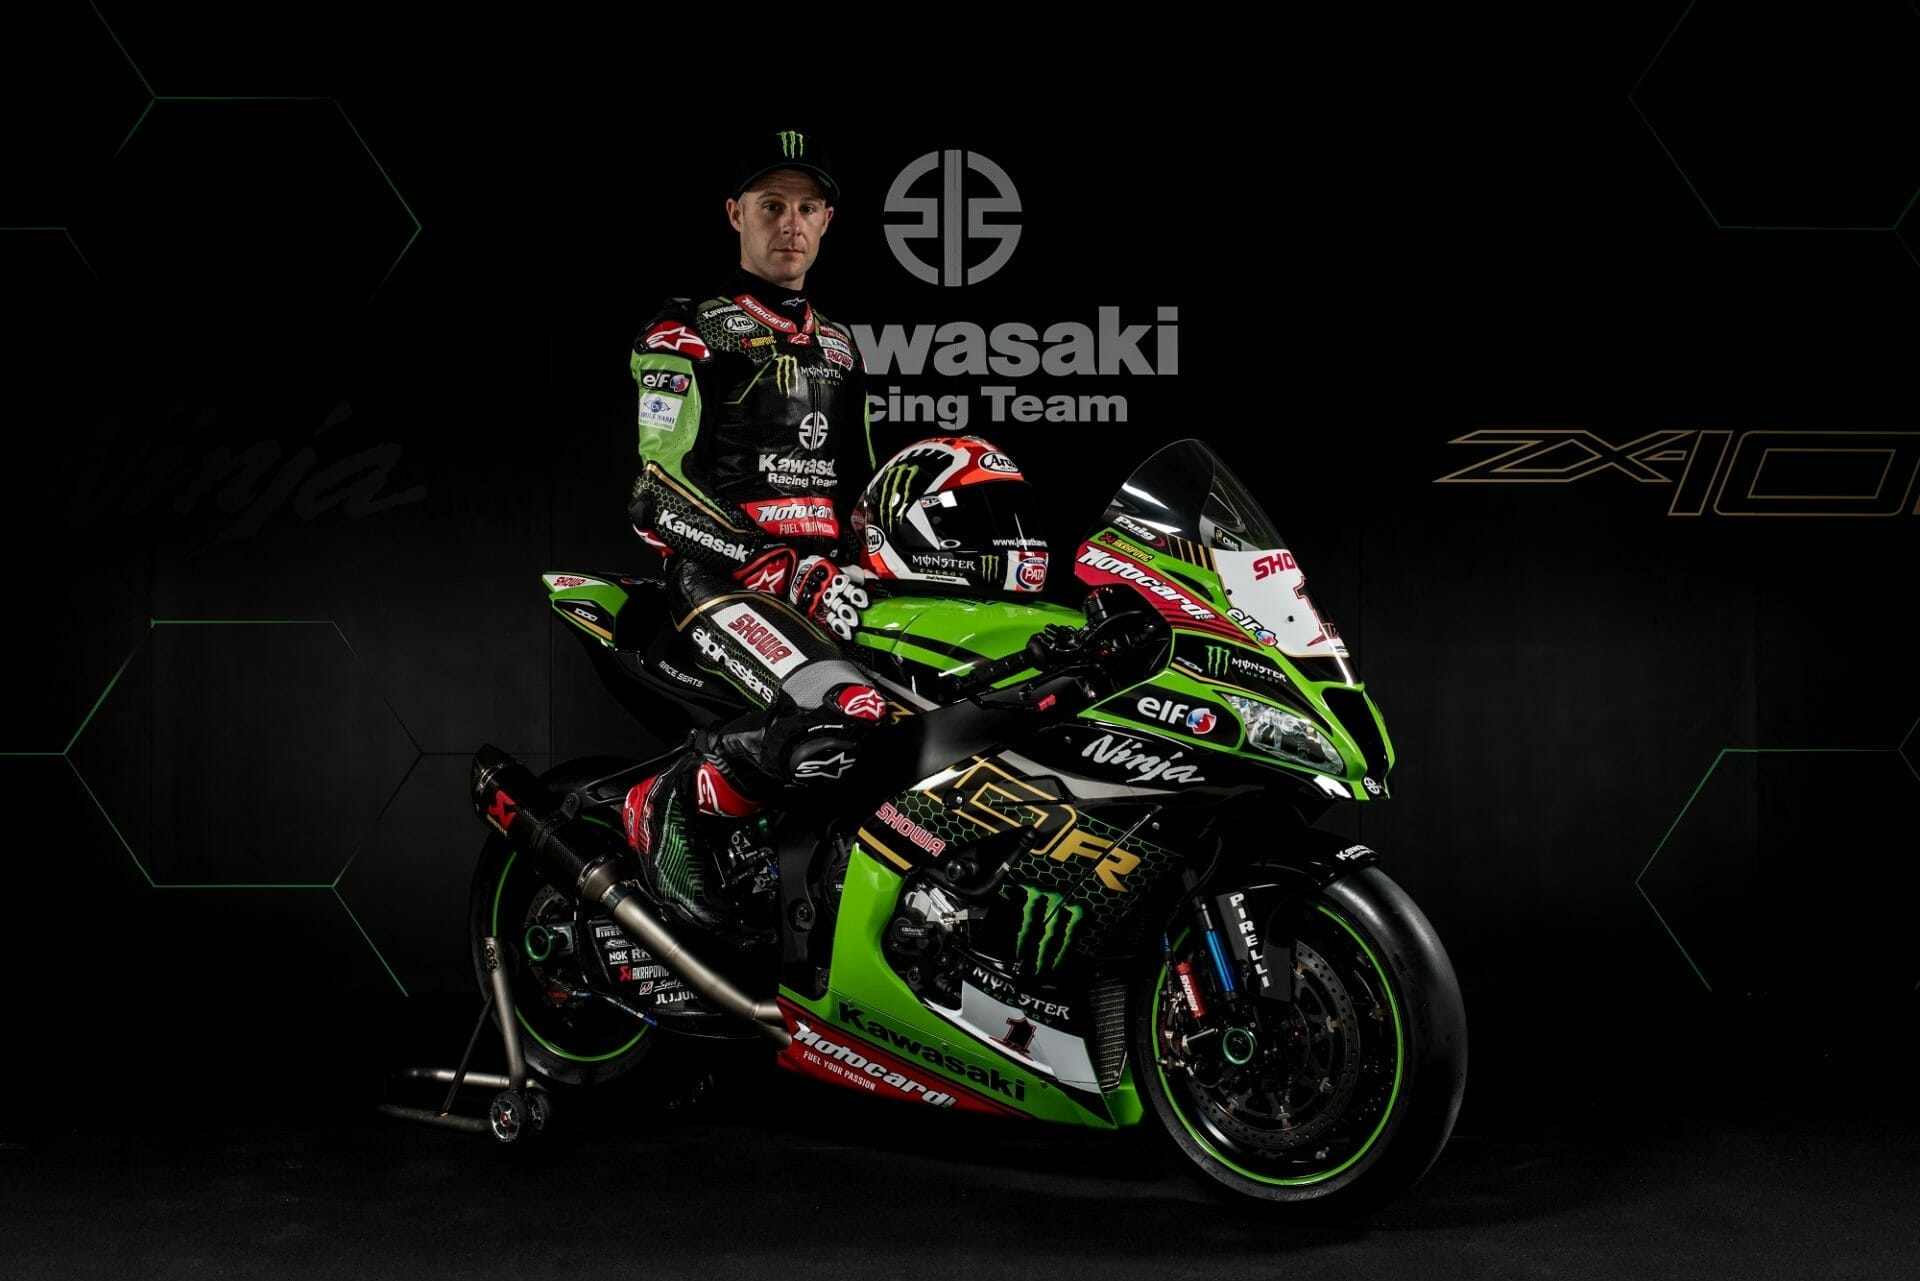 Unfortunately, no Kawasaki World SBK bike in a MotoGP race
- also in the MOTORCYCLE NEWS APP